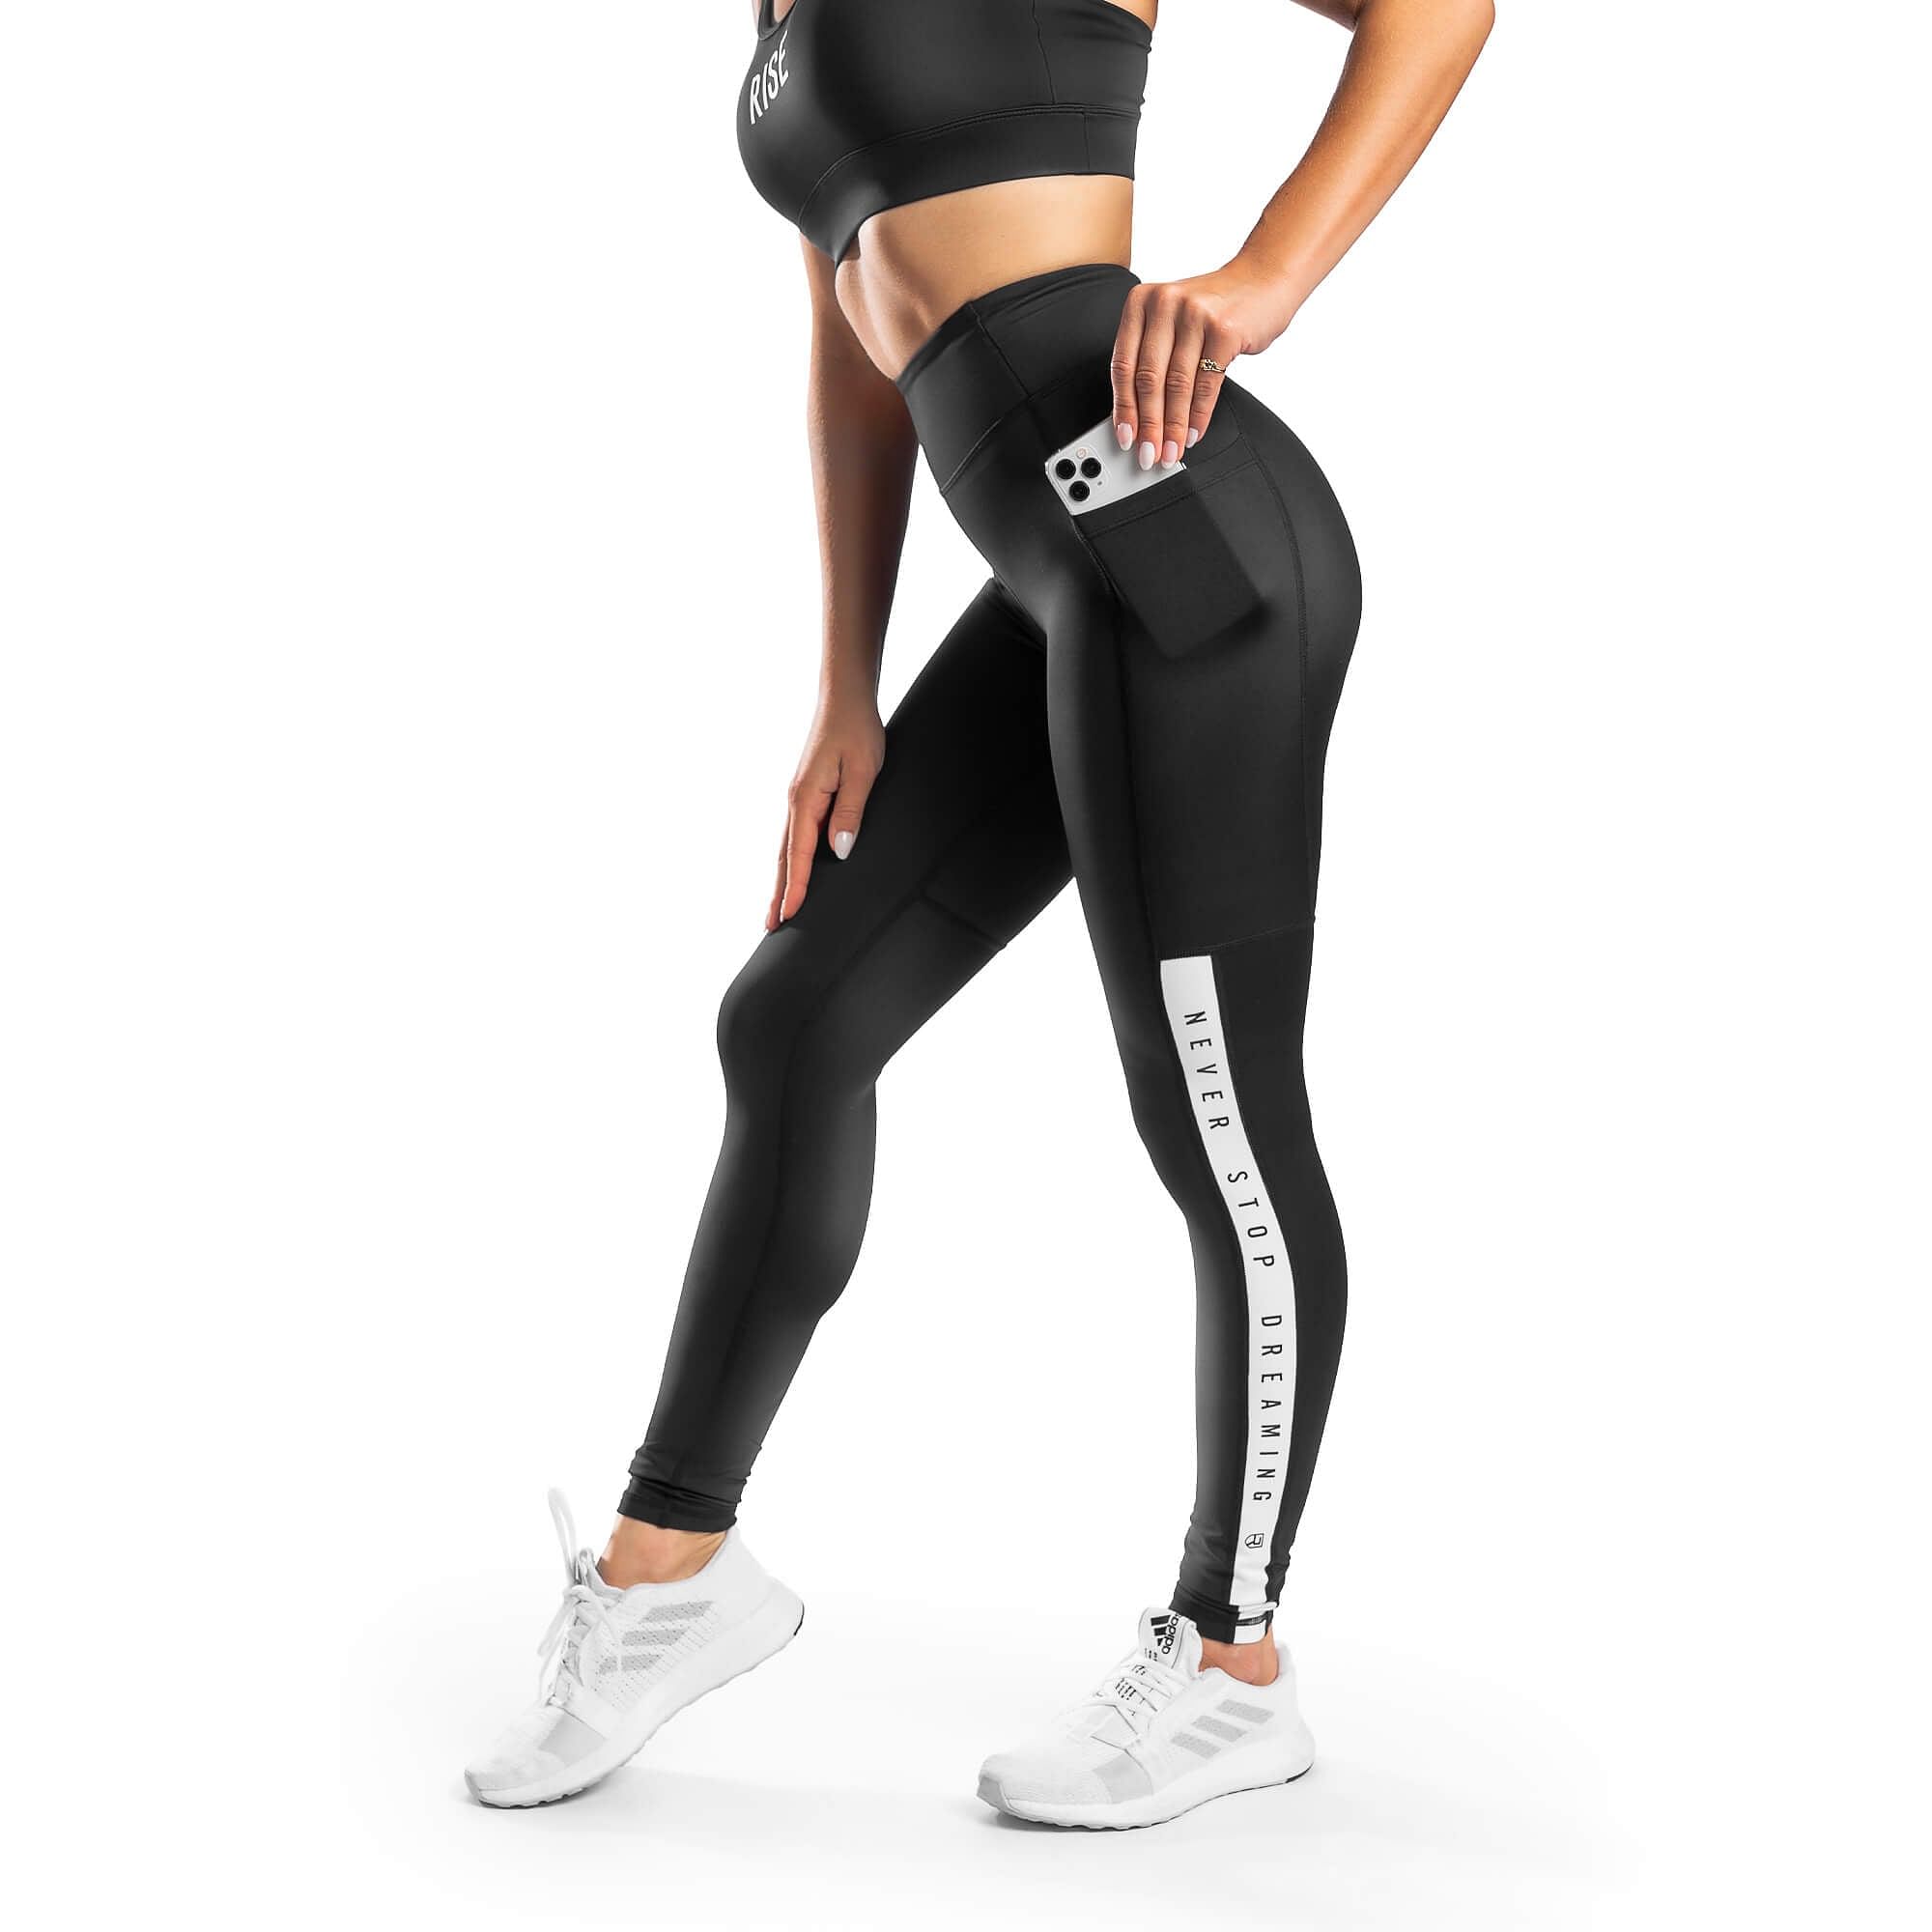 Eodora Yoga Pants with Back Pockets Women's High Waist Stretch Leggings  Black Camo M 